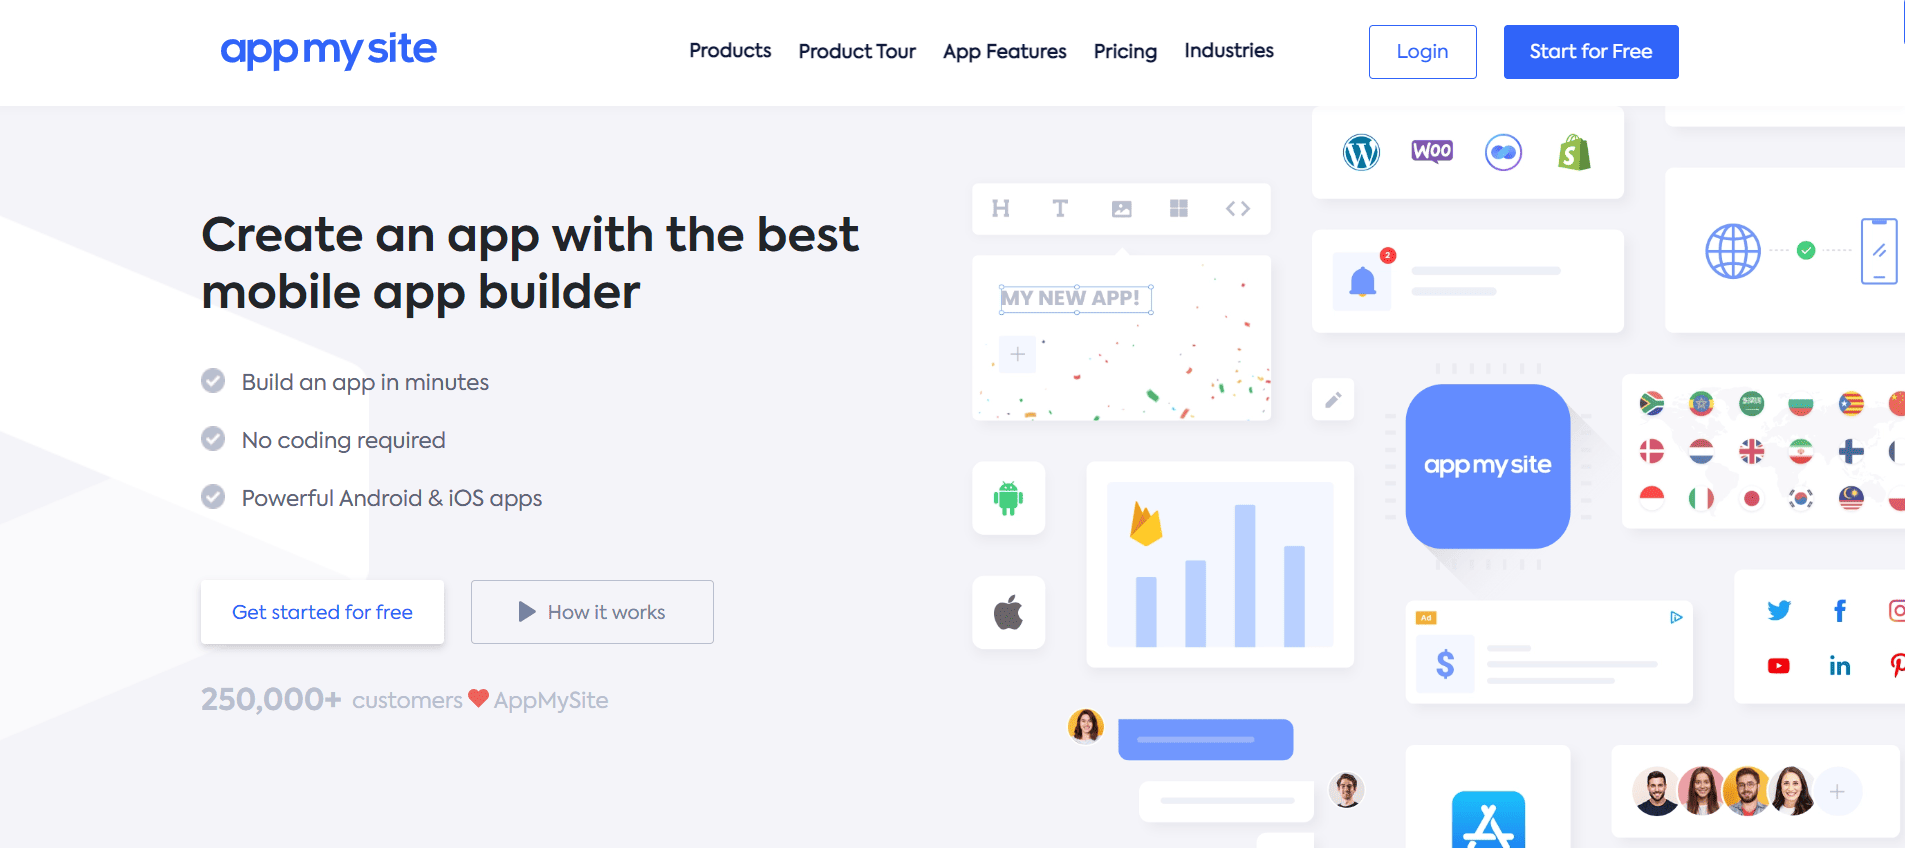 appmysite review best mobile app builder